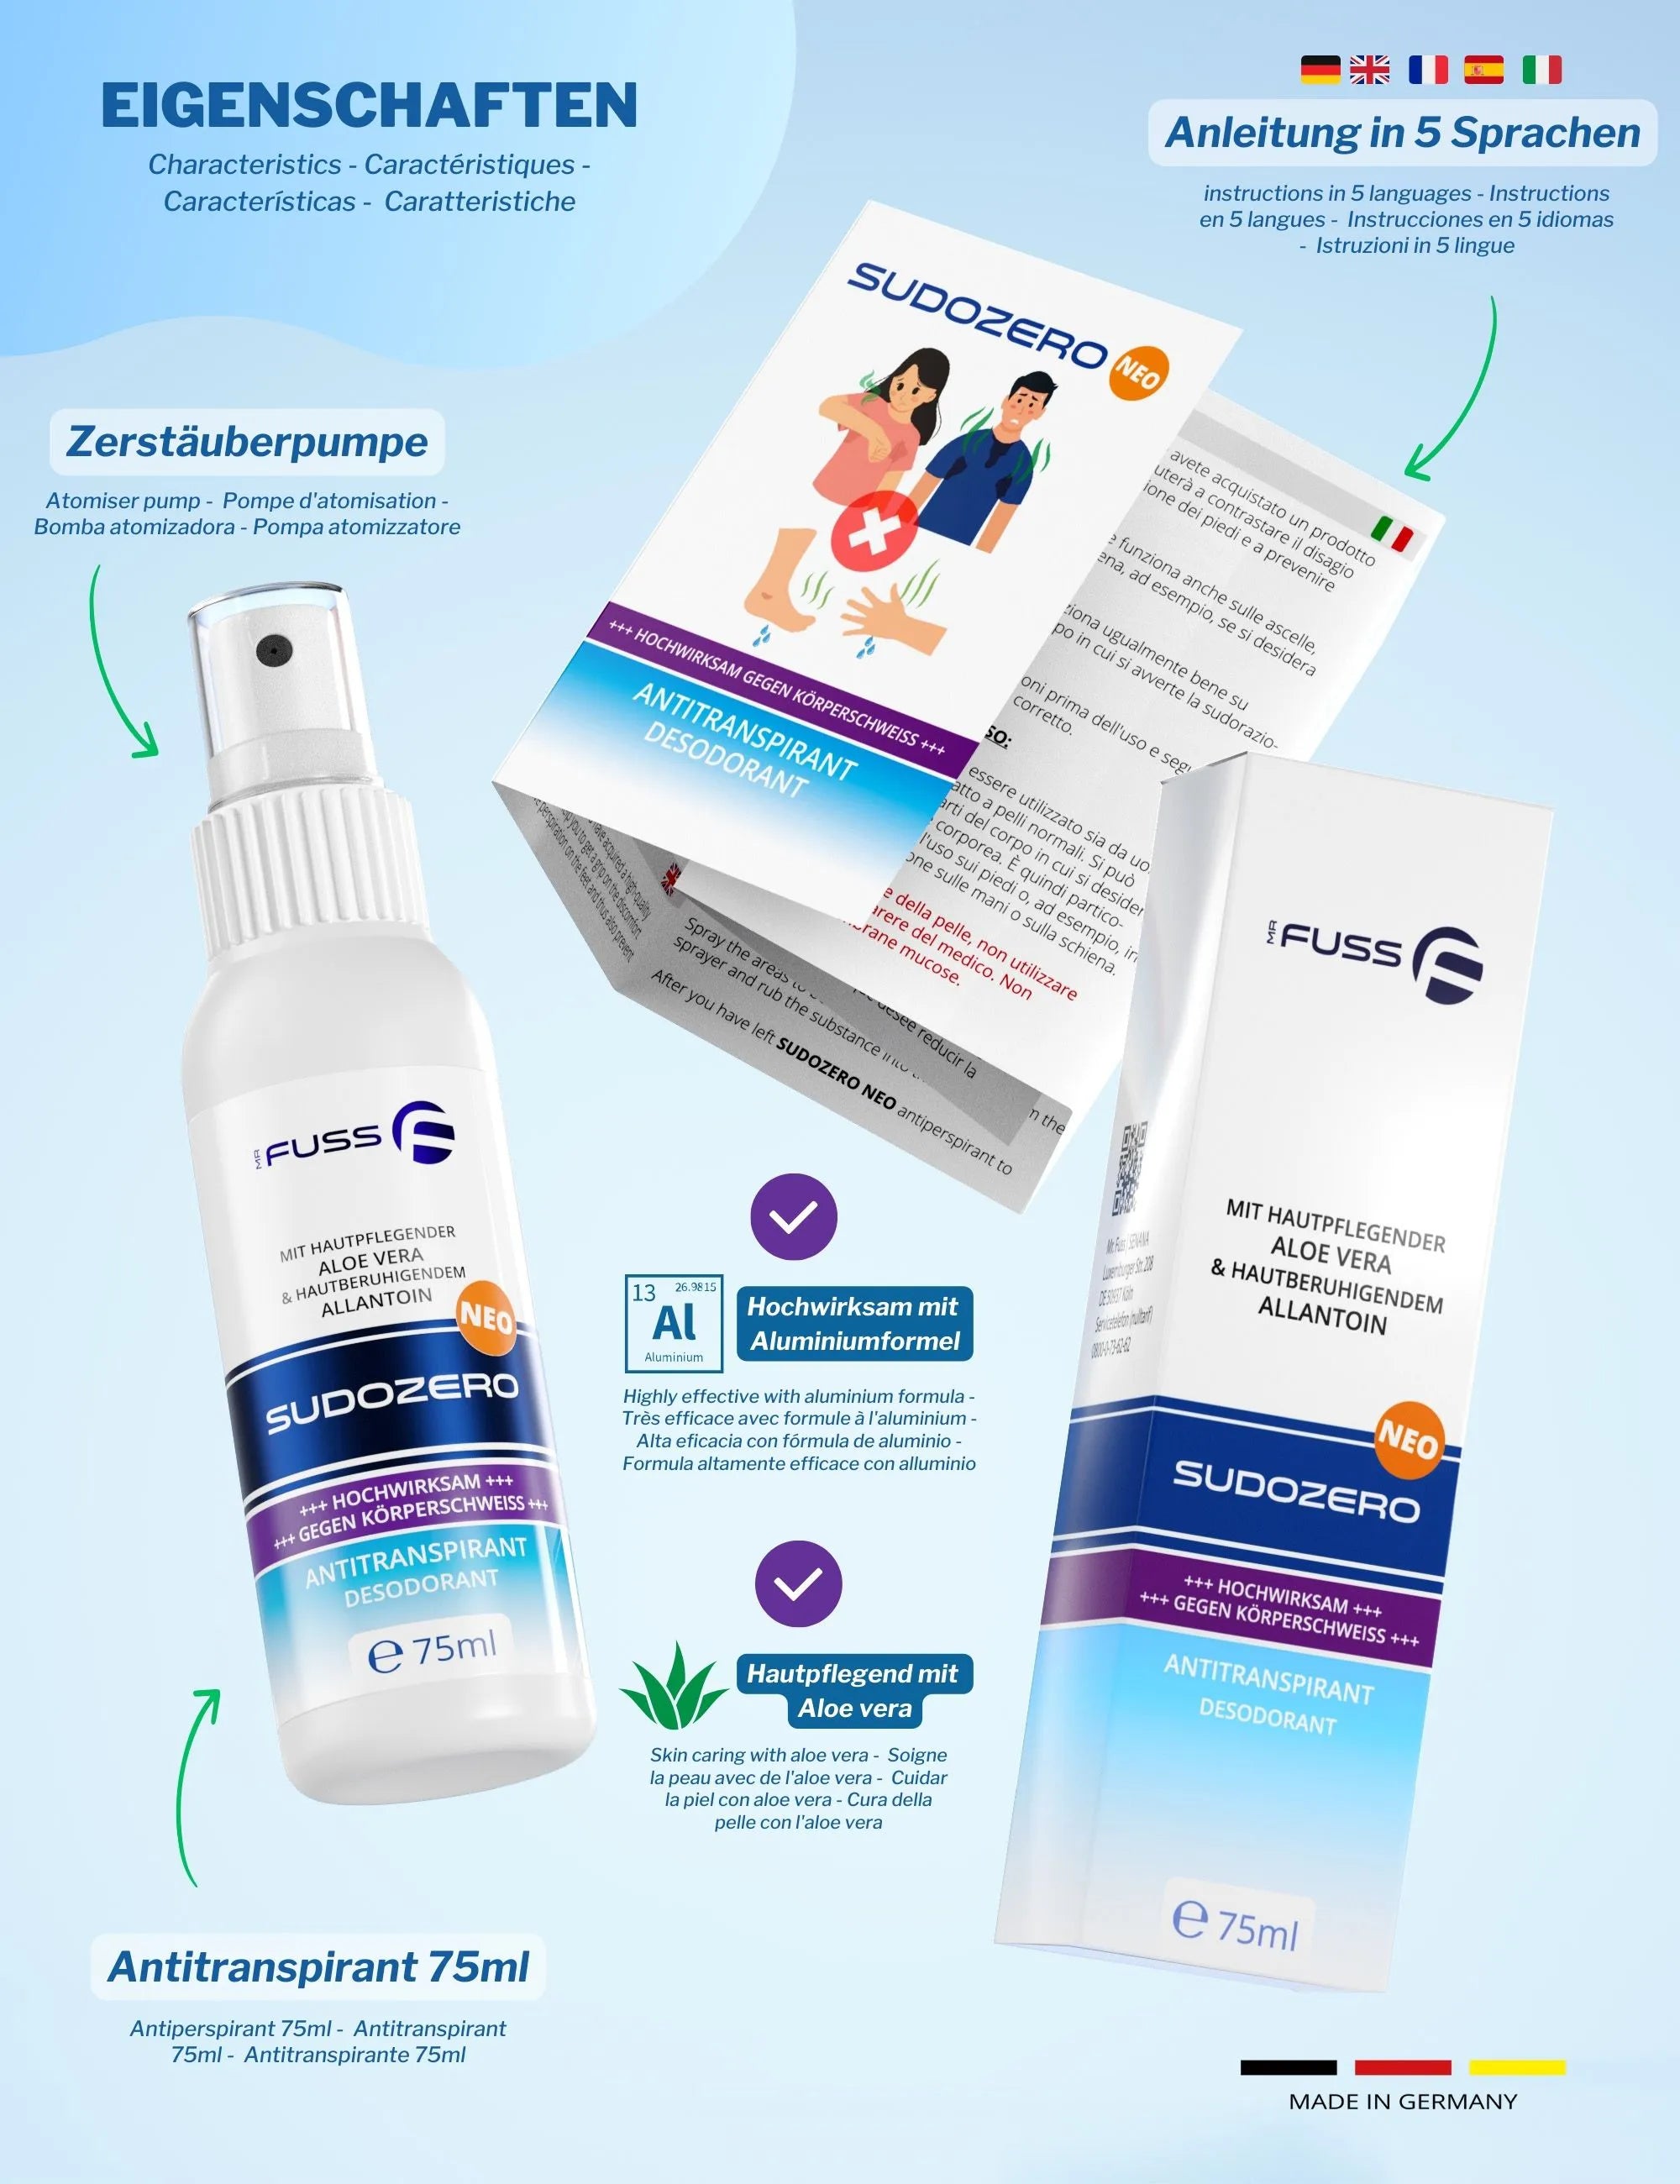 SUDOZERO Neo - Antiperspirant / Deodorant - 75ml